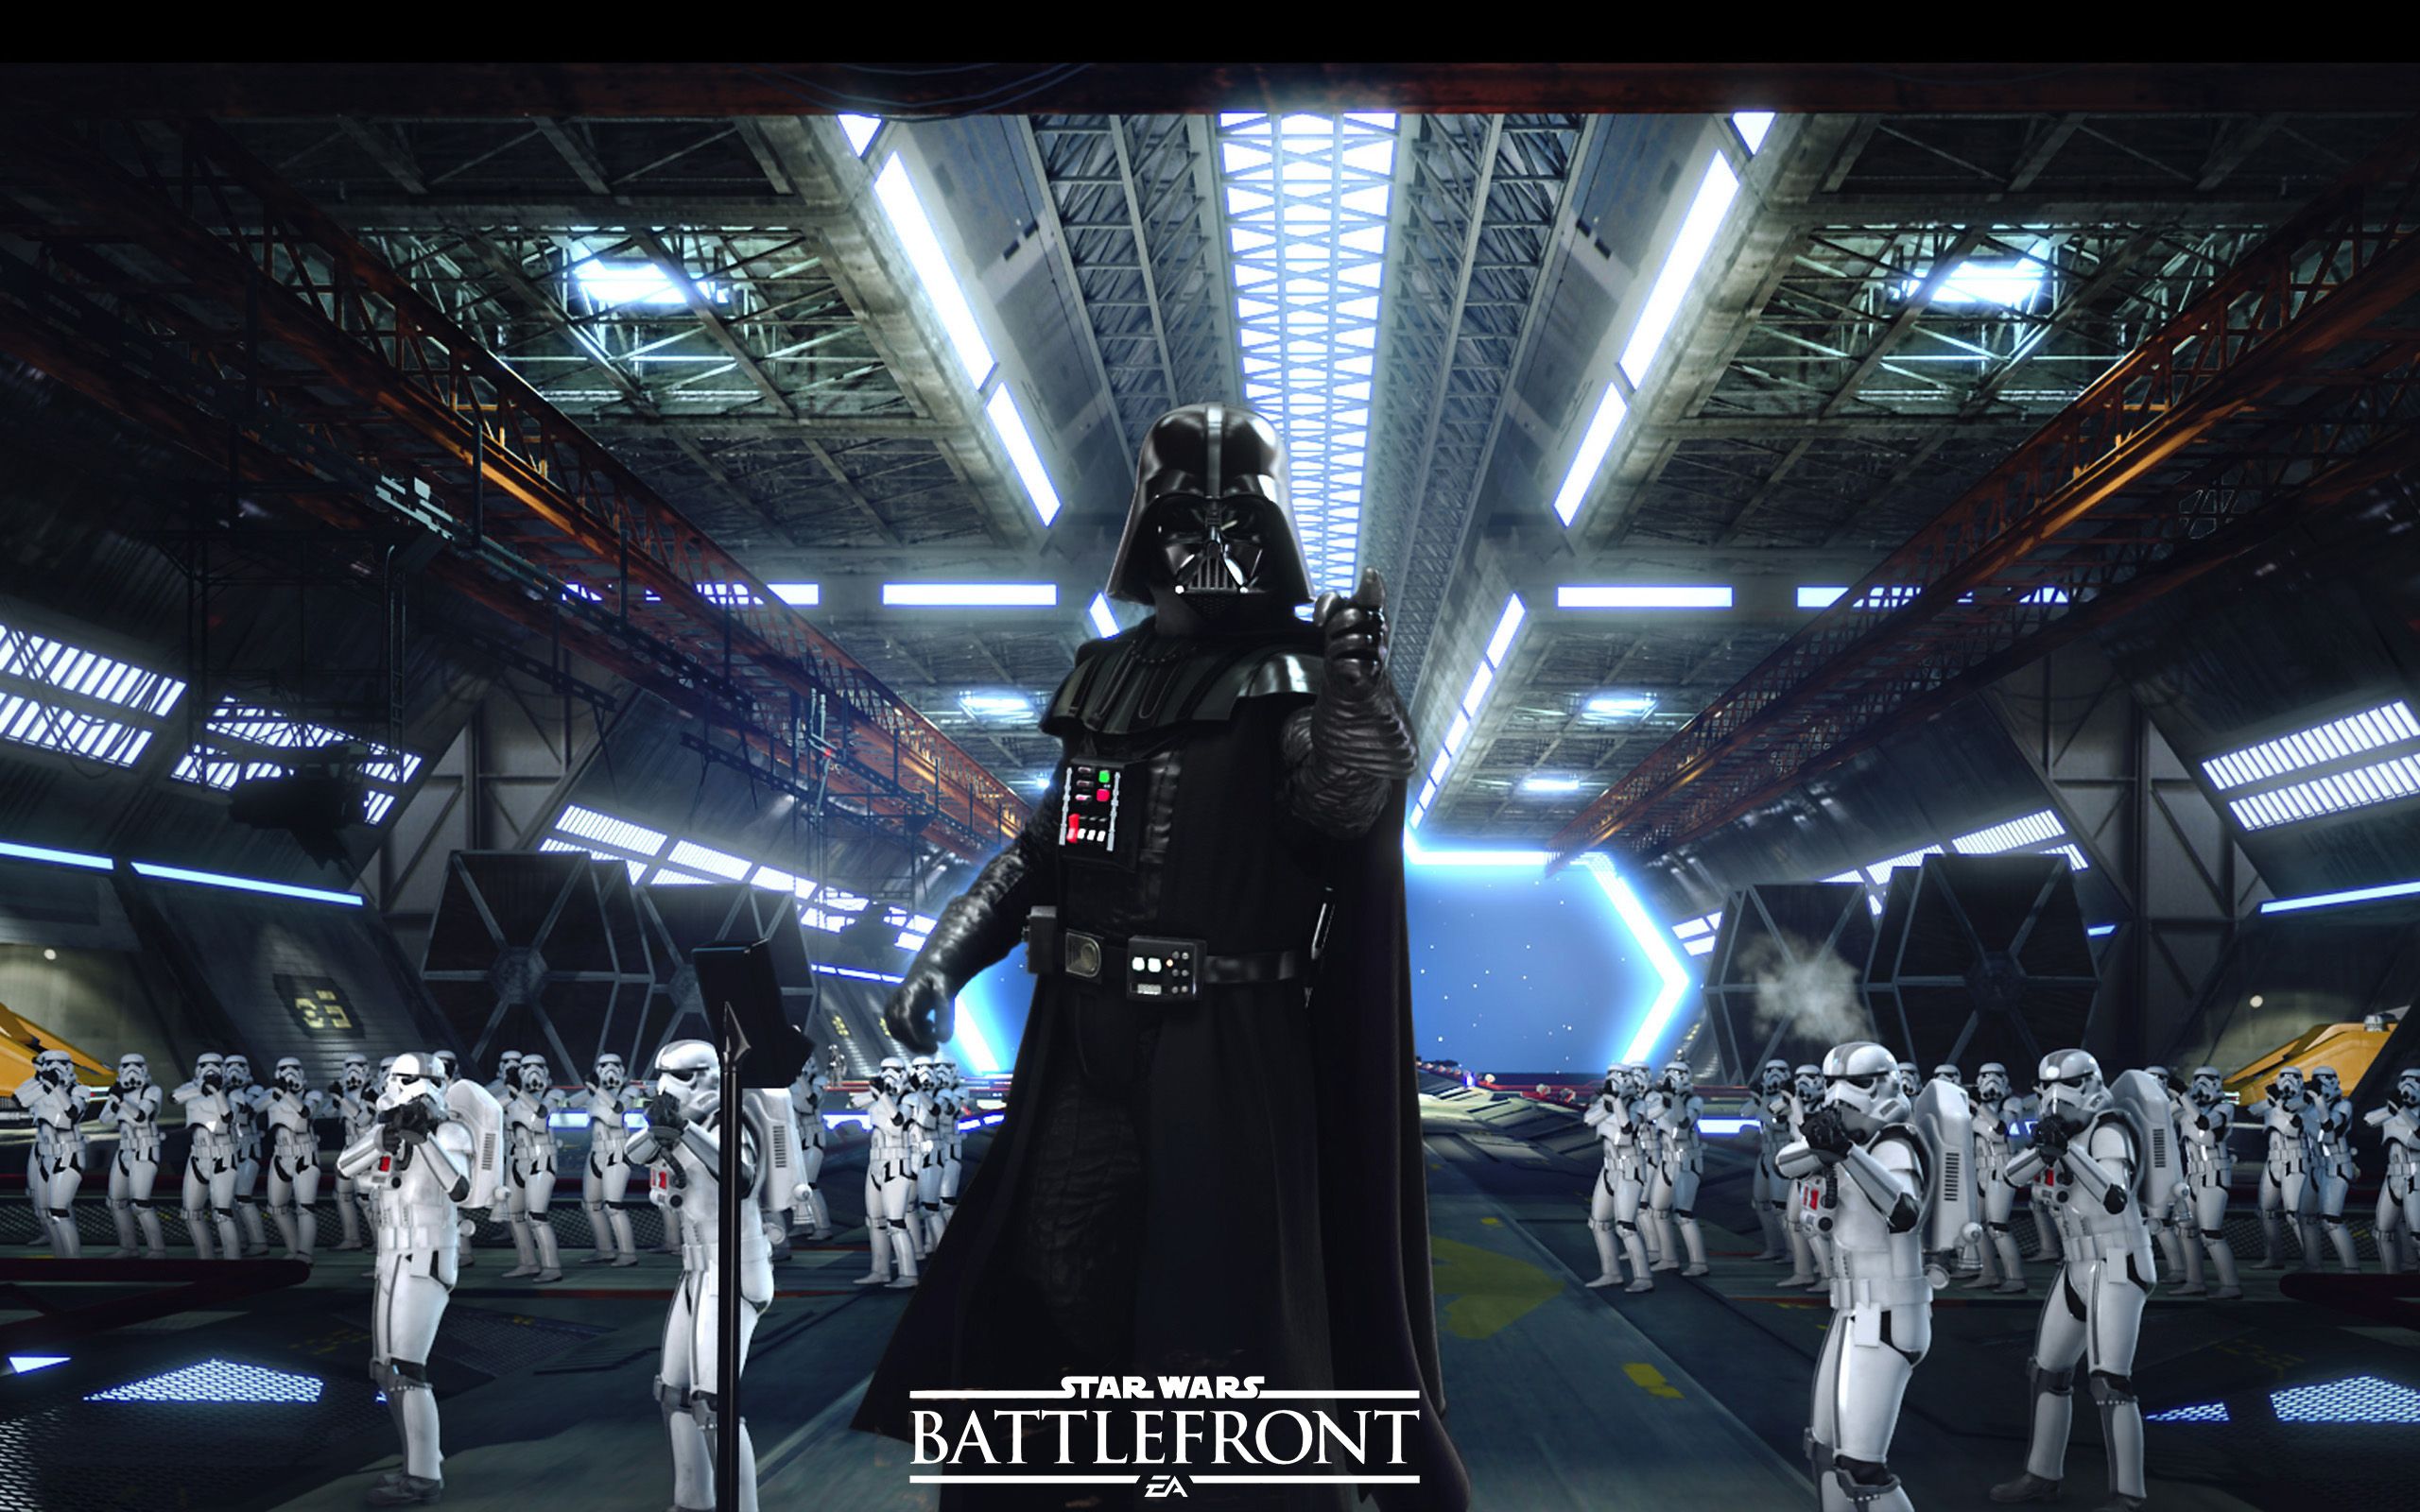 Star Wars Battlefront Wallpaper In High Resolution | HD Wallpapers ...